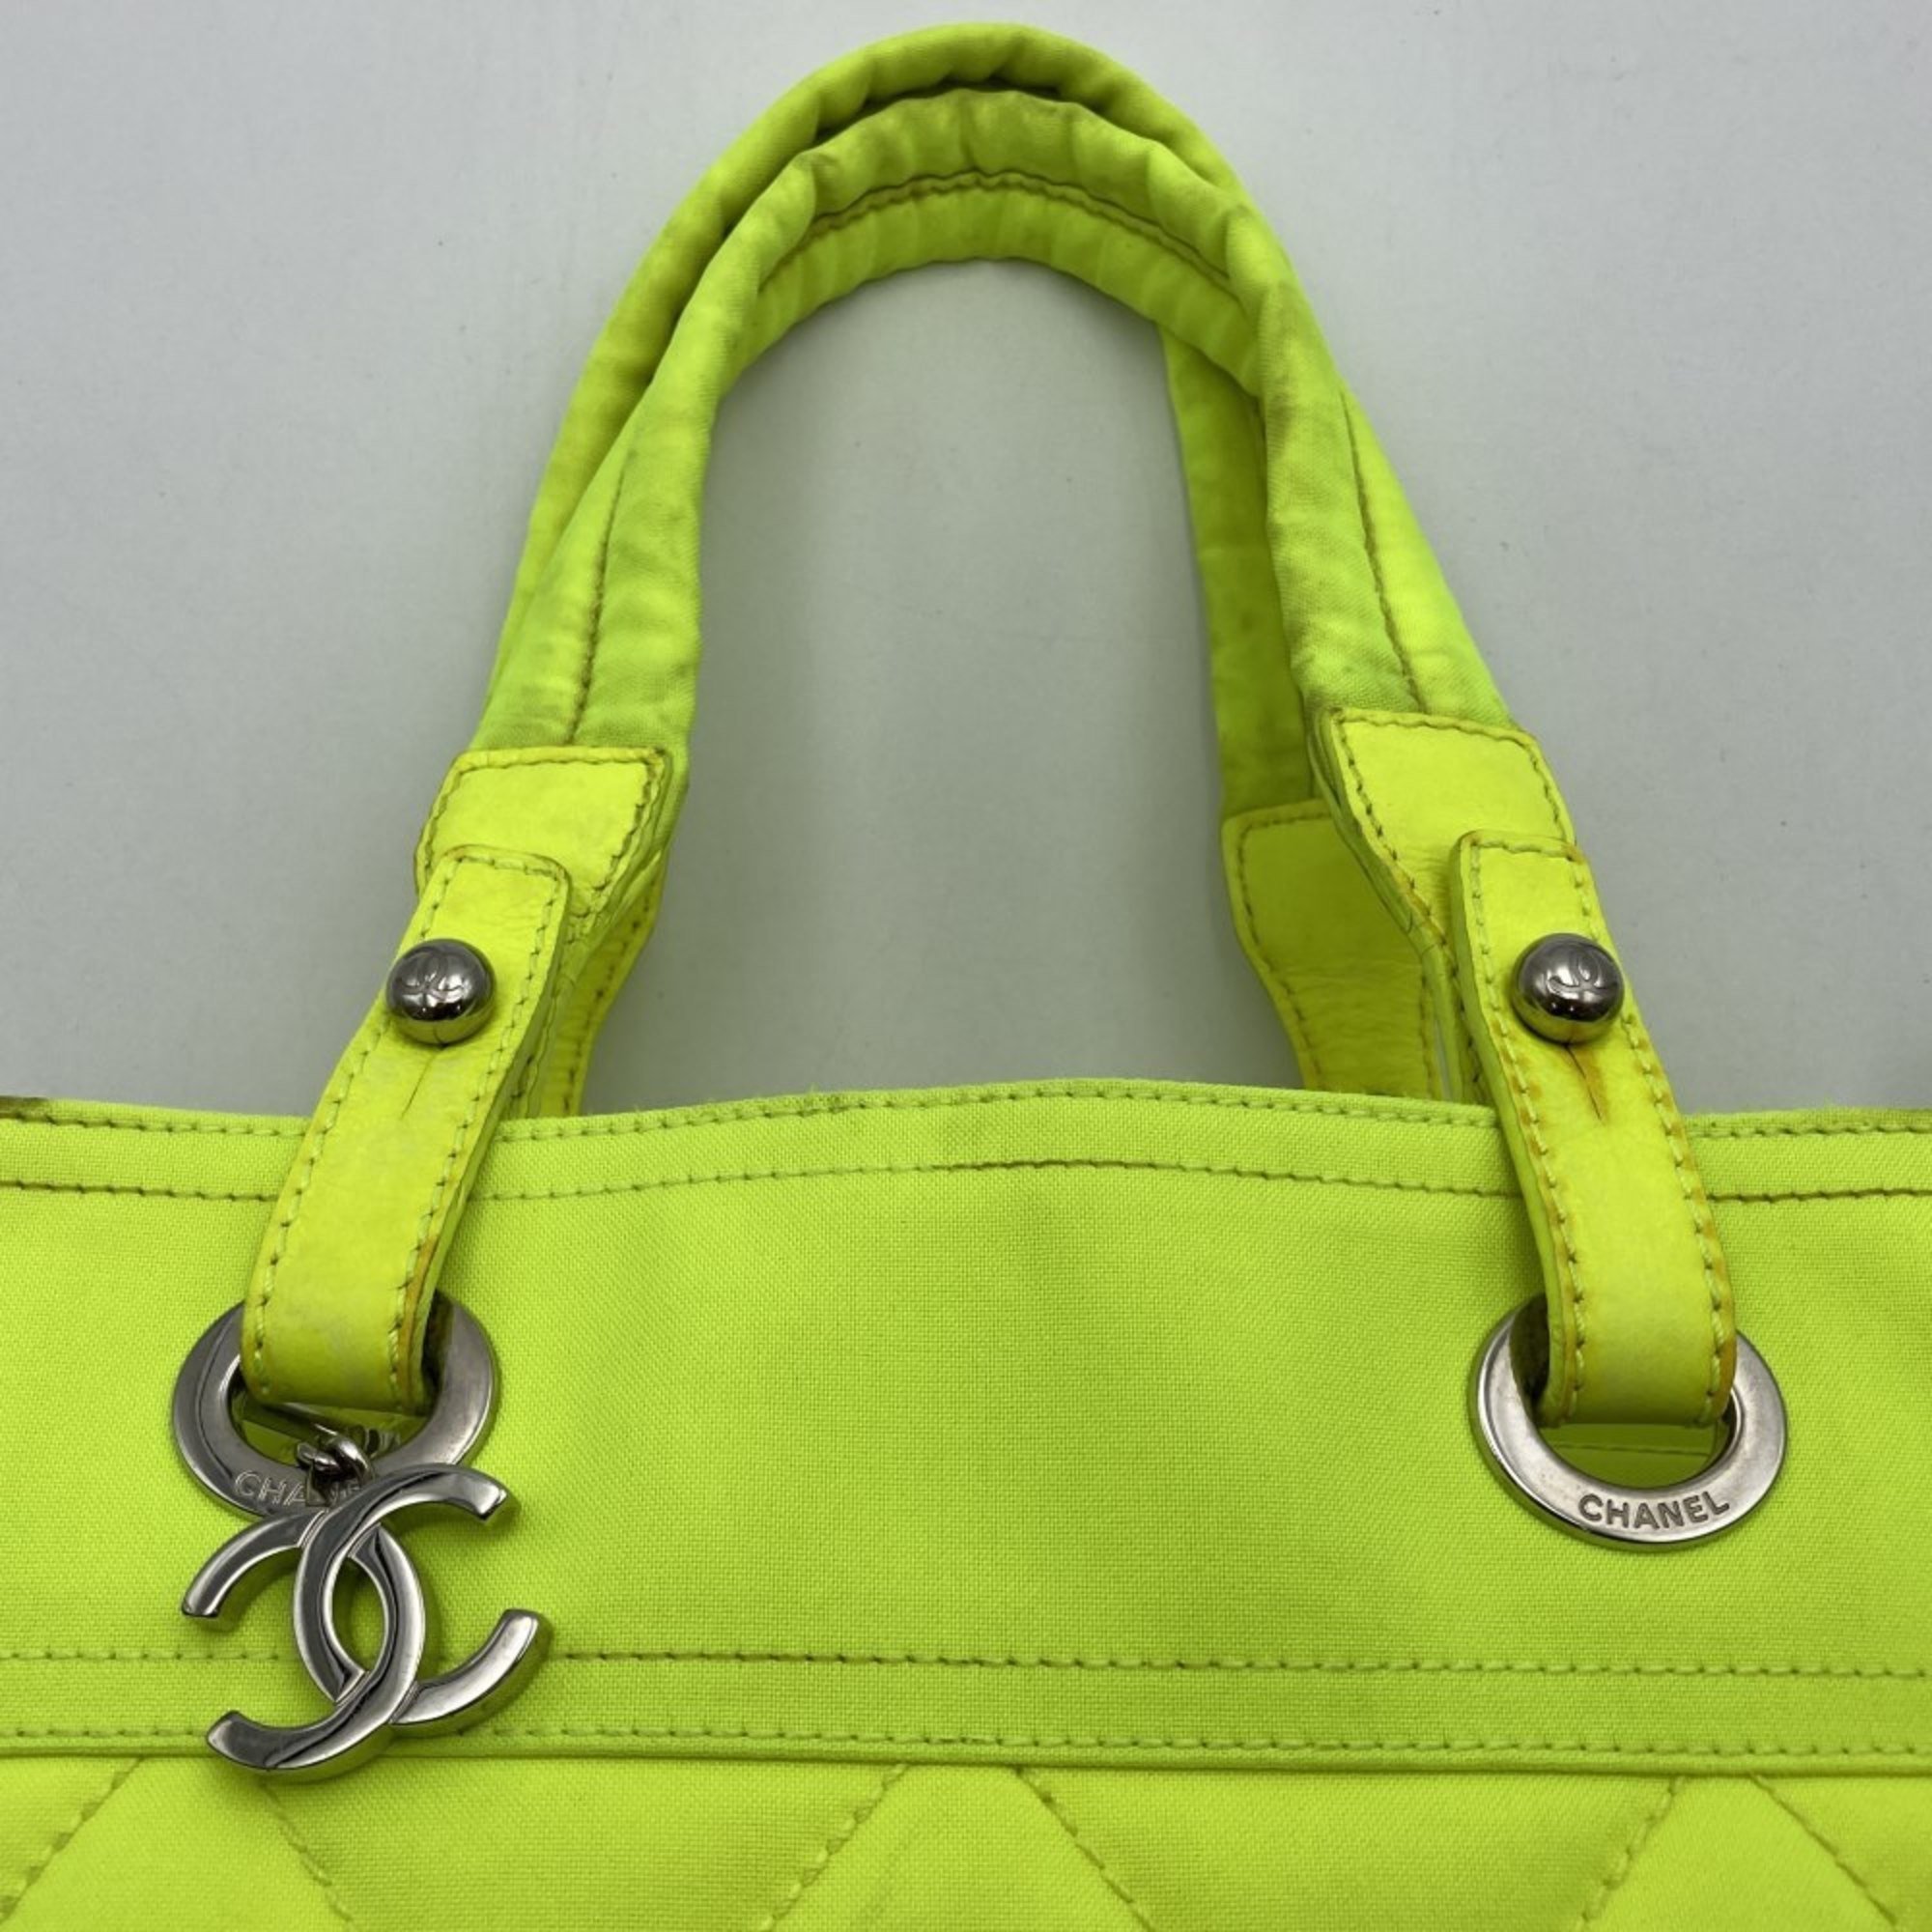 Chanel Handbag Tote Bag Paris Biarritz PM Neon Yellow Canvas Women's CHANEL